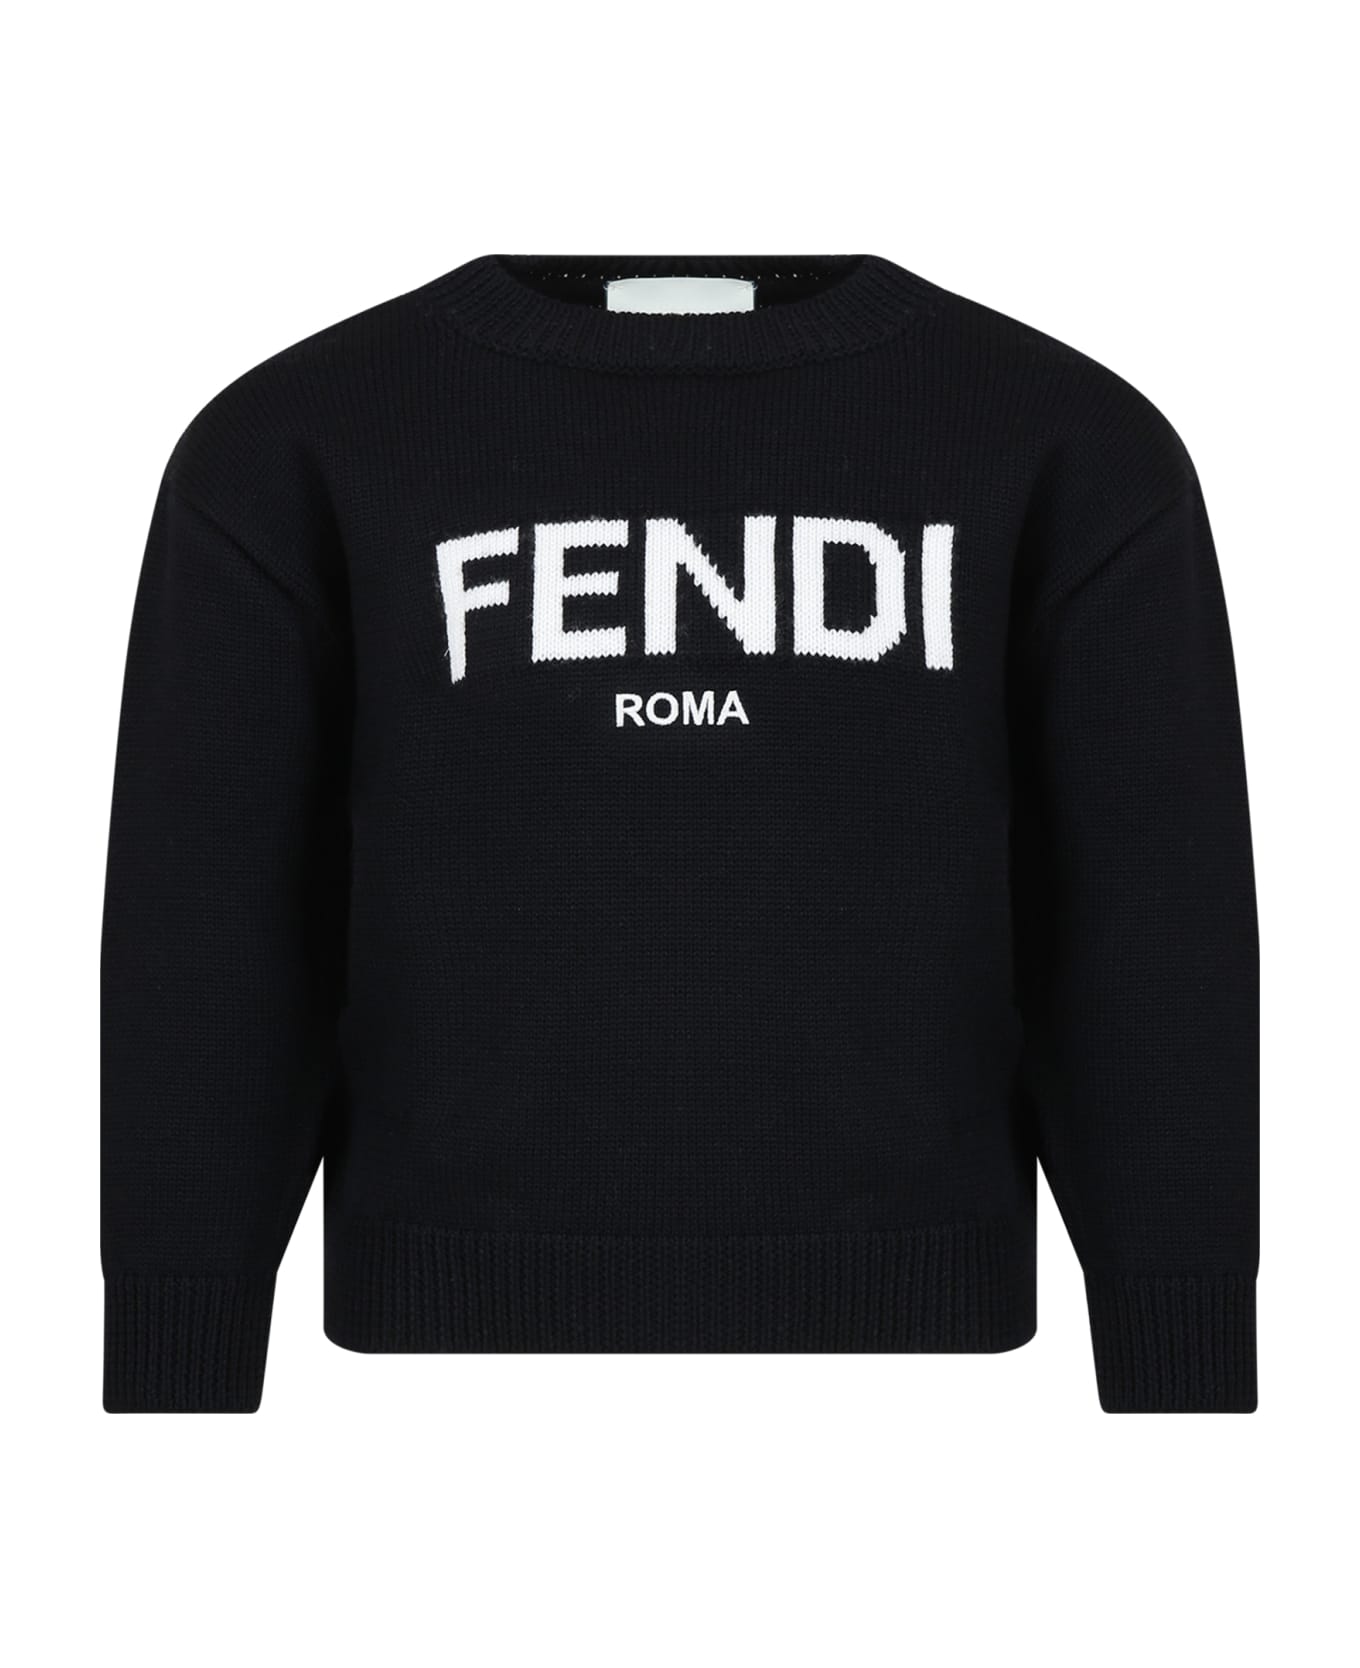 Fendi Black Sweater With Logo For Kids - Black